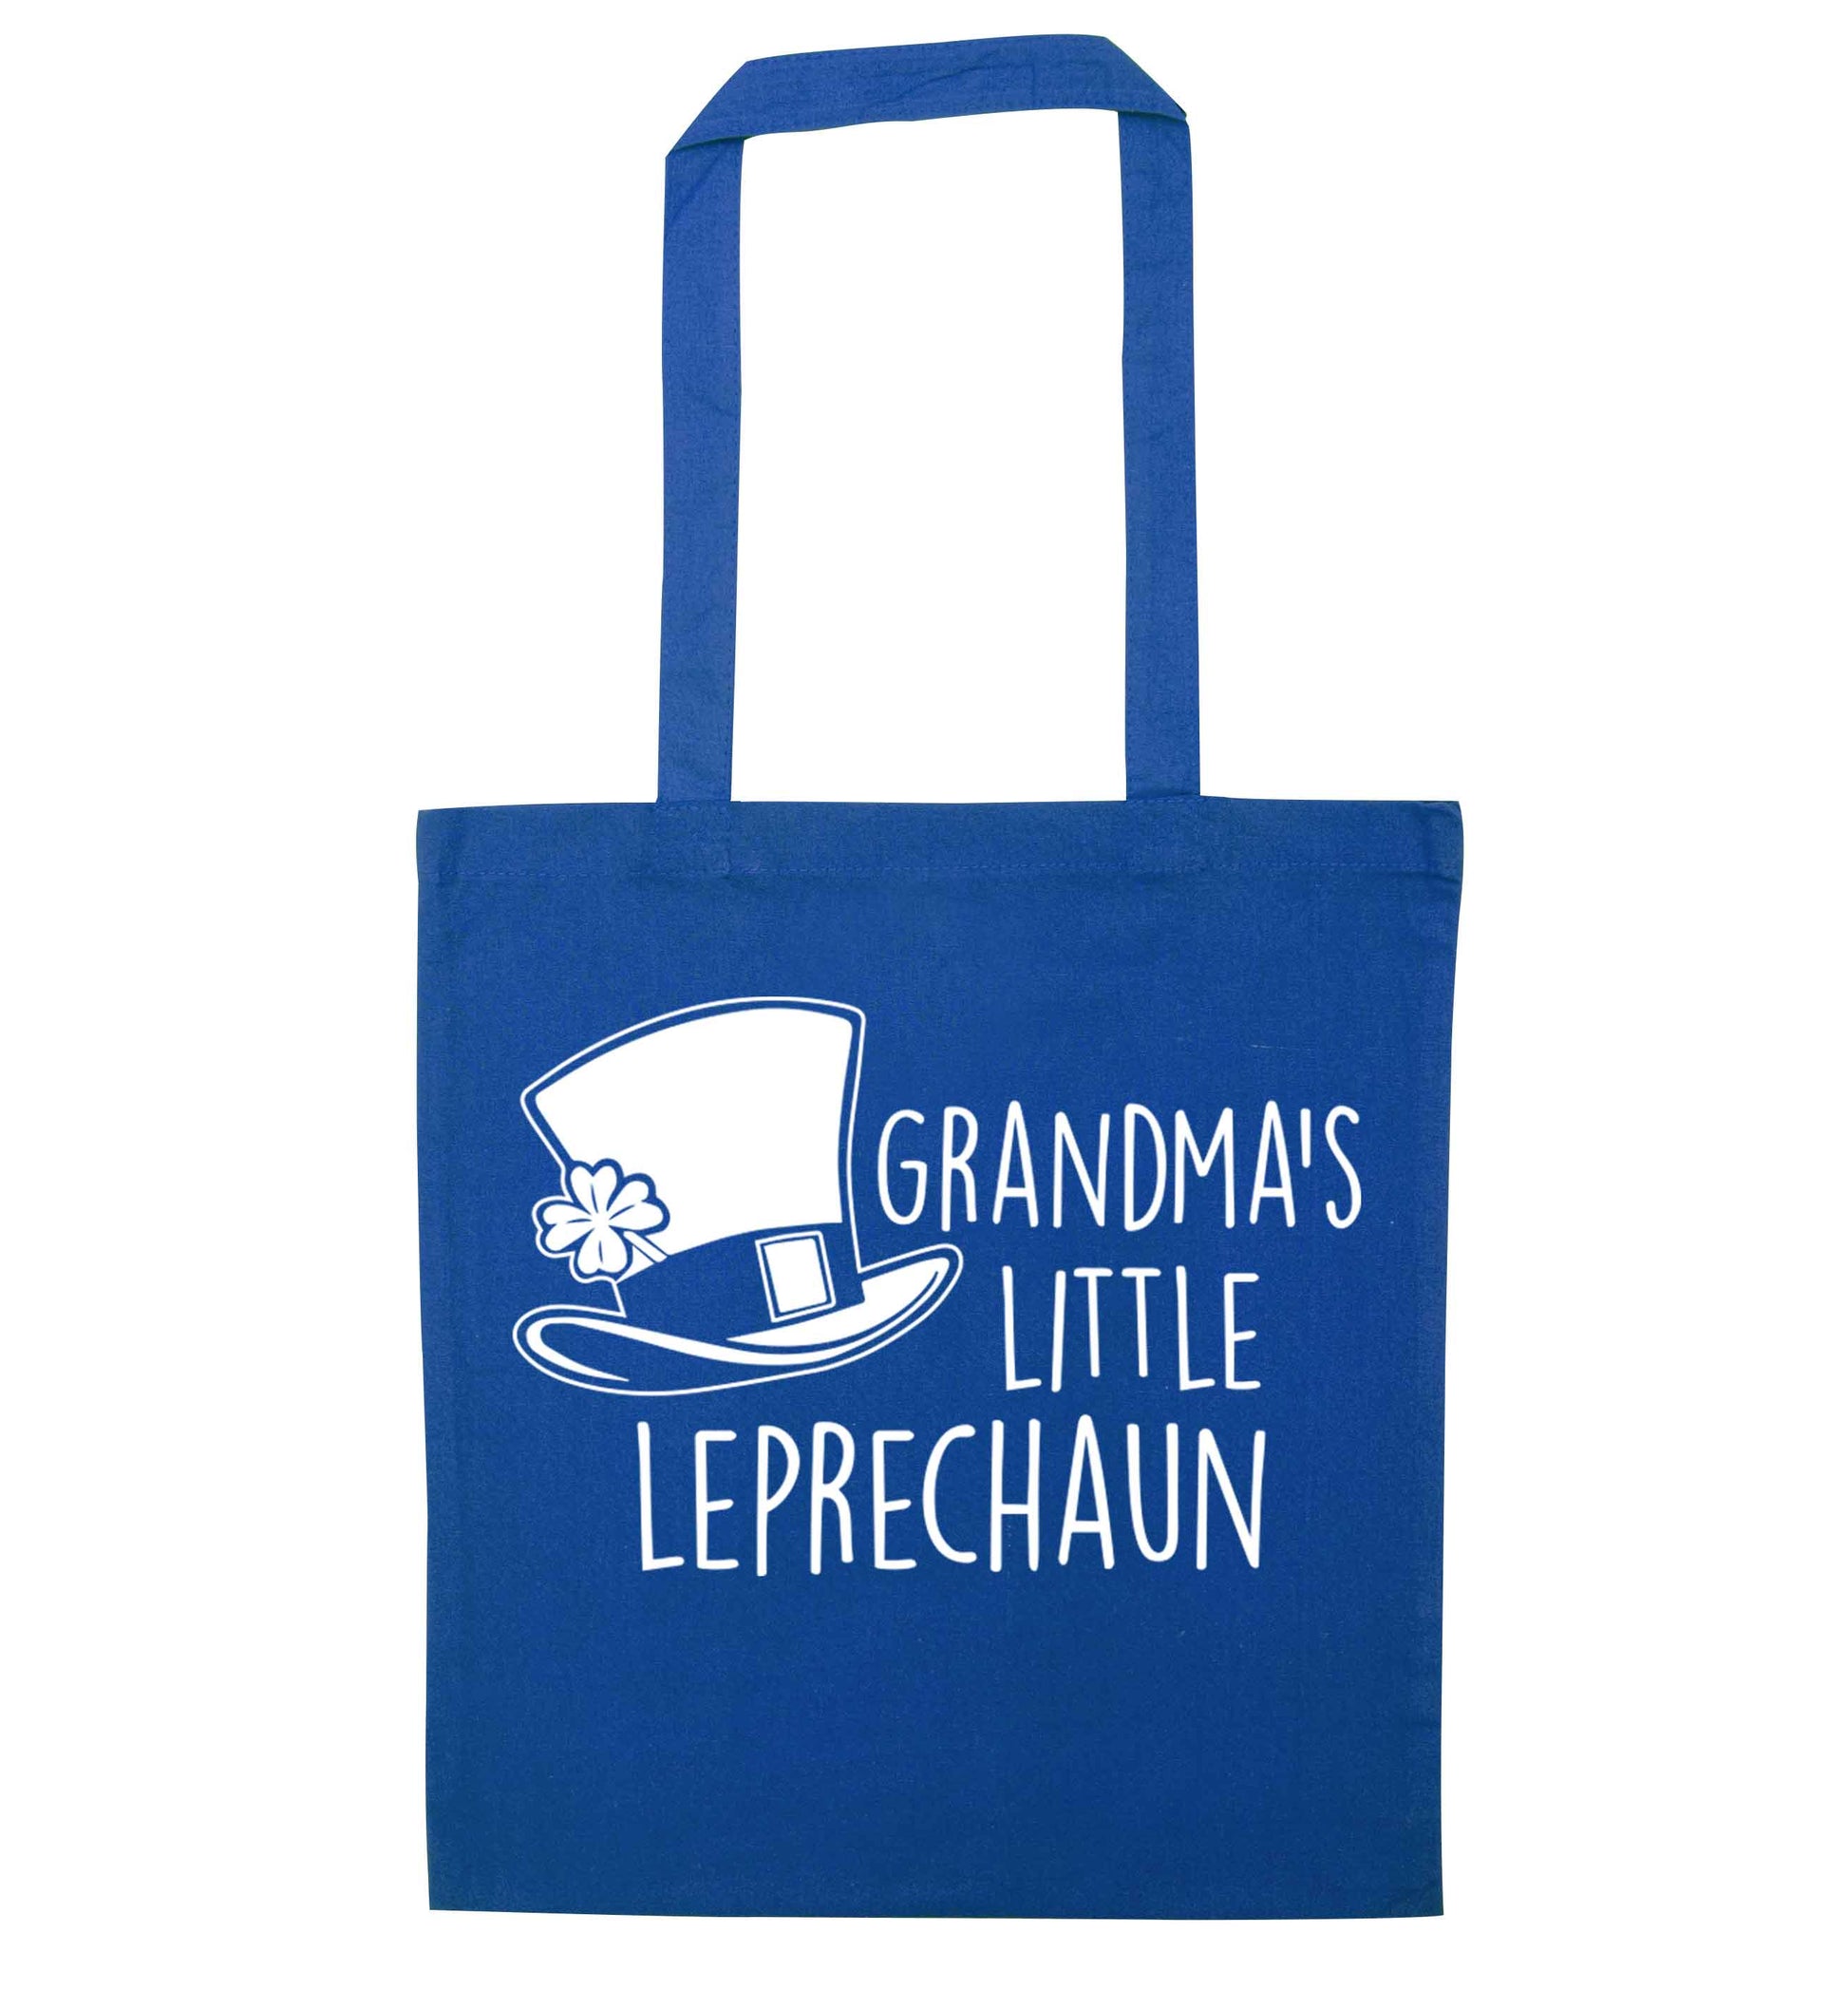 Grandma's little leprechaun blue tote bag